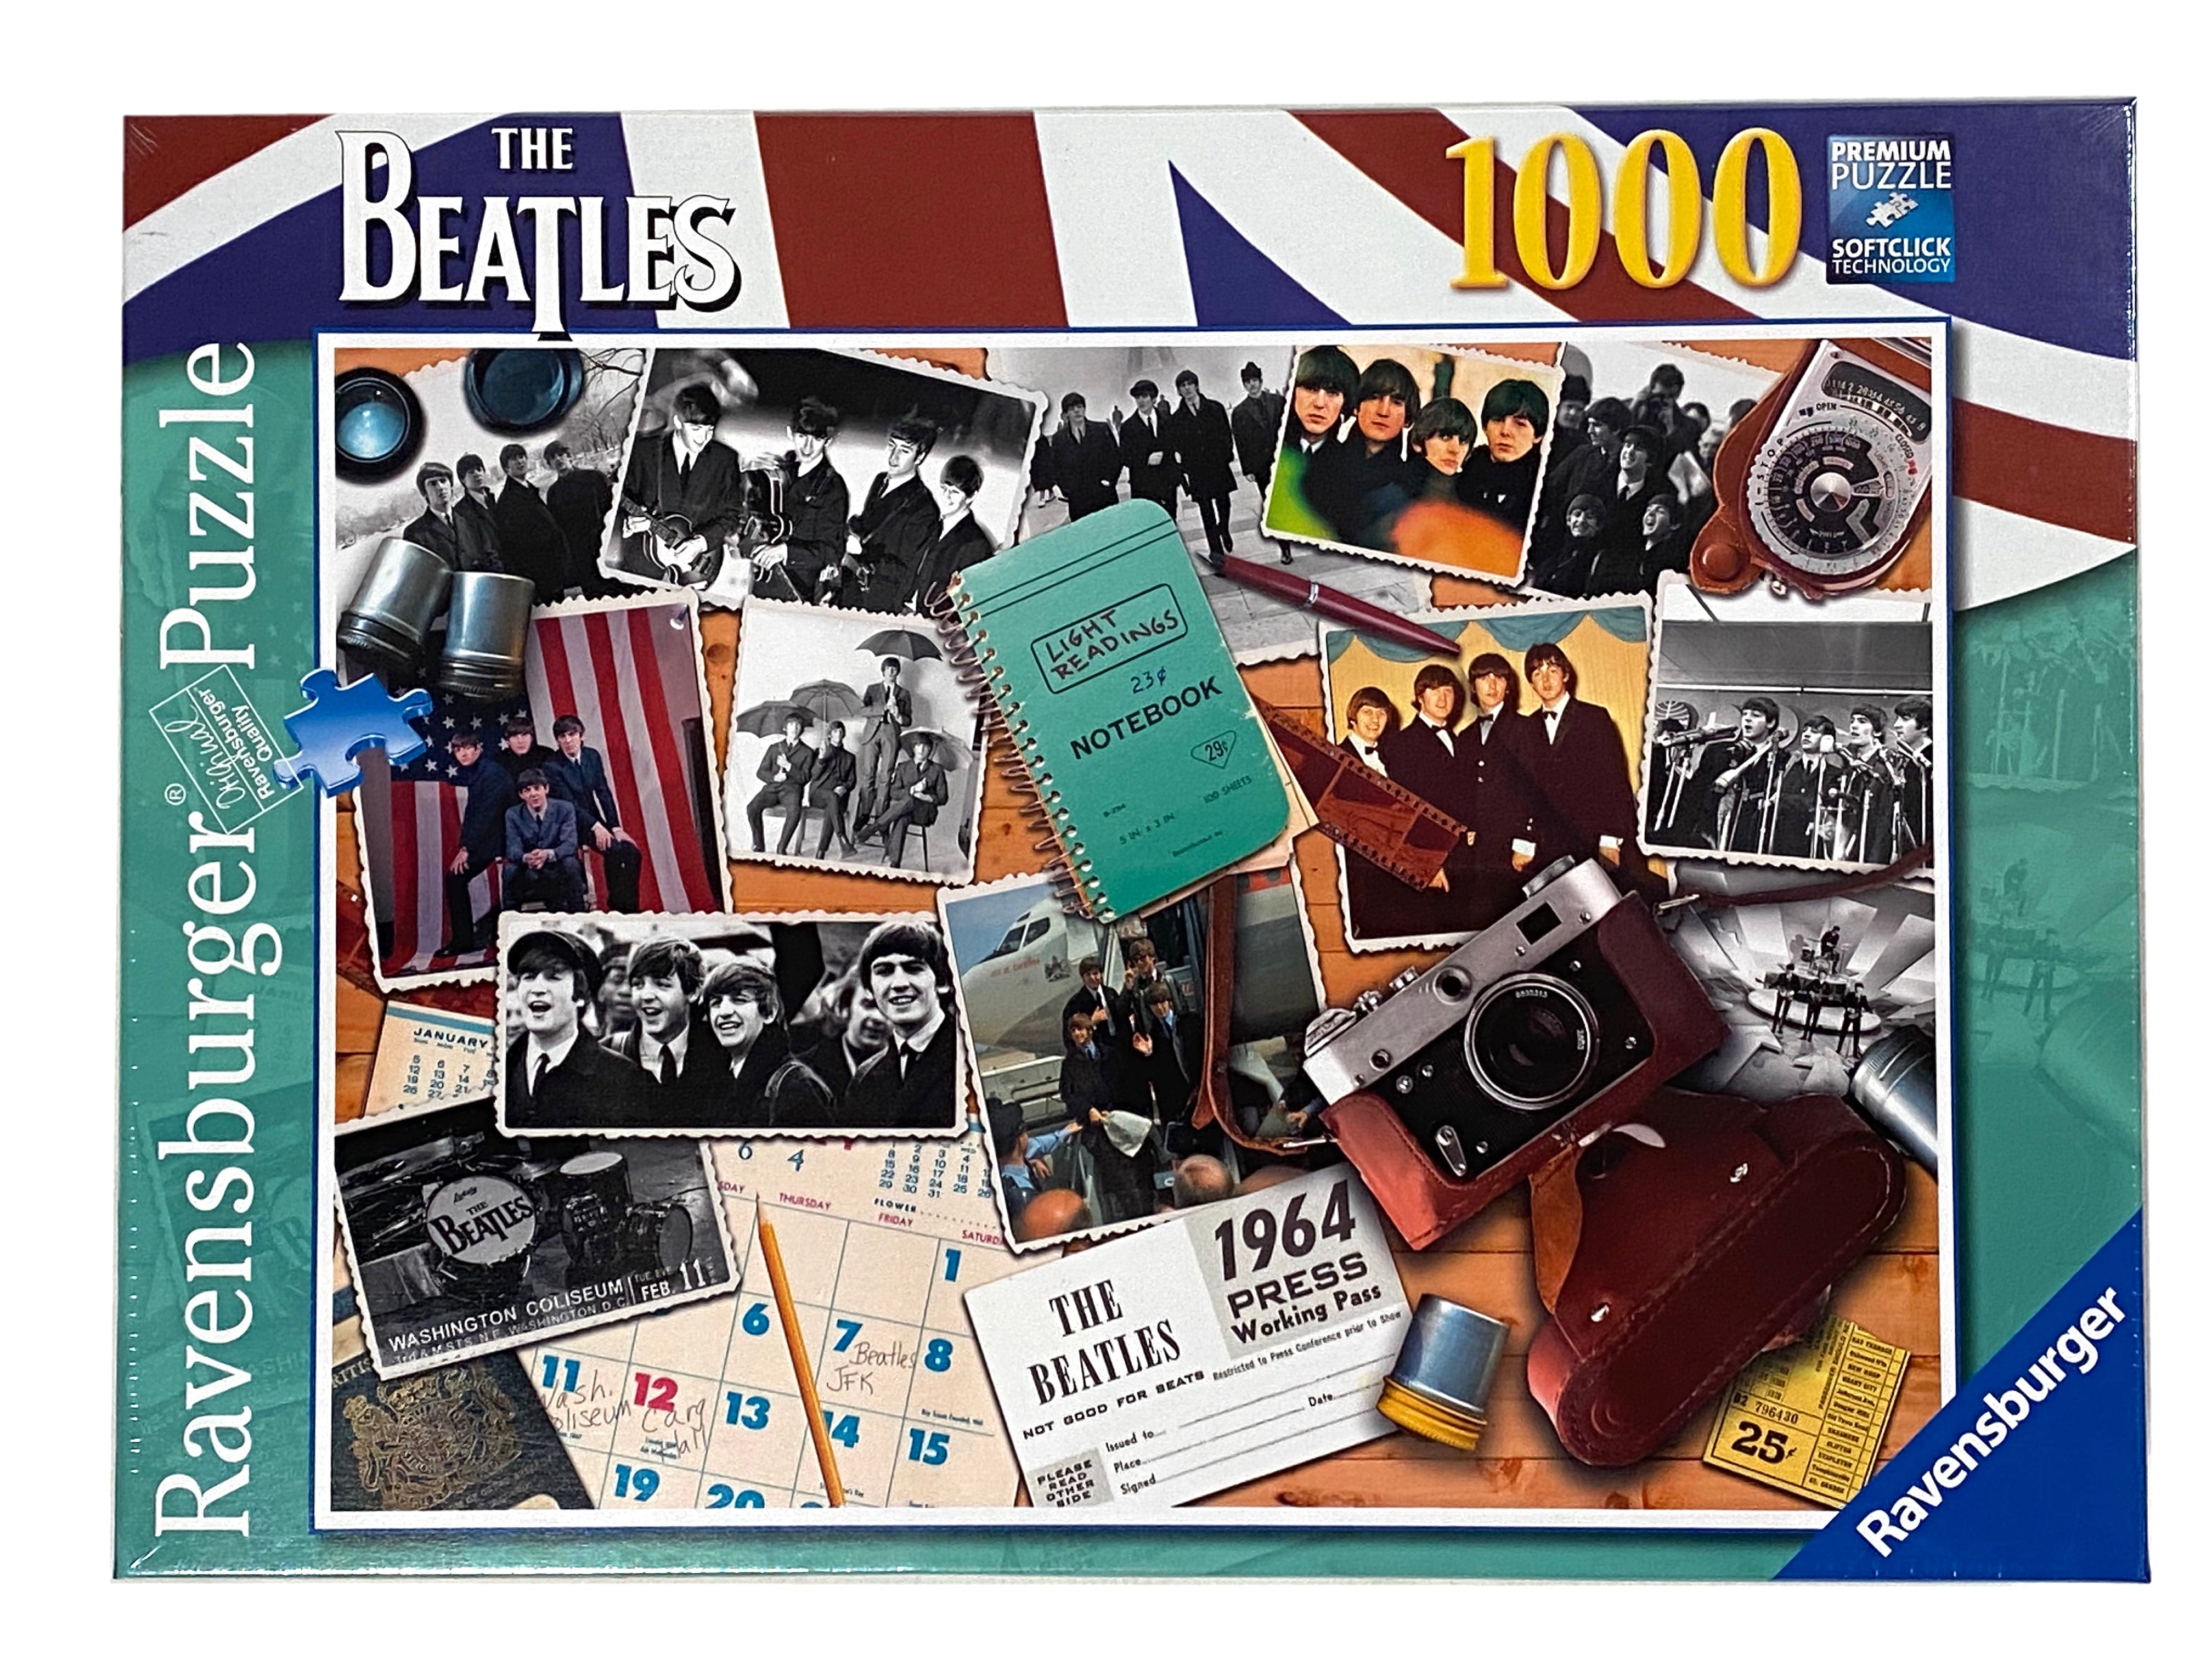 The Beatles 1964 - A Photographer's View 1000 piece puzzle    